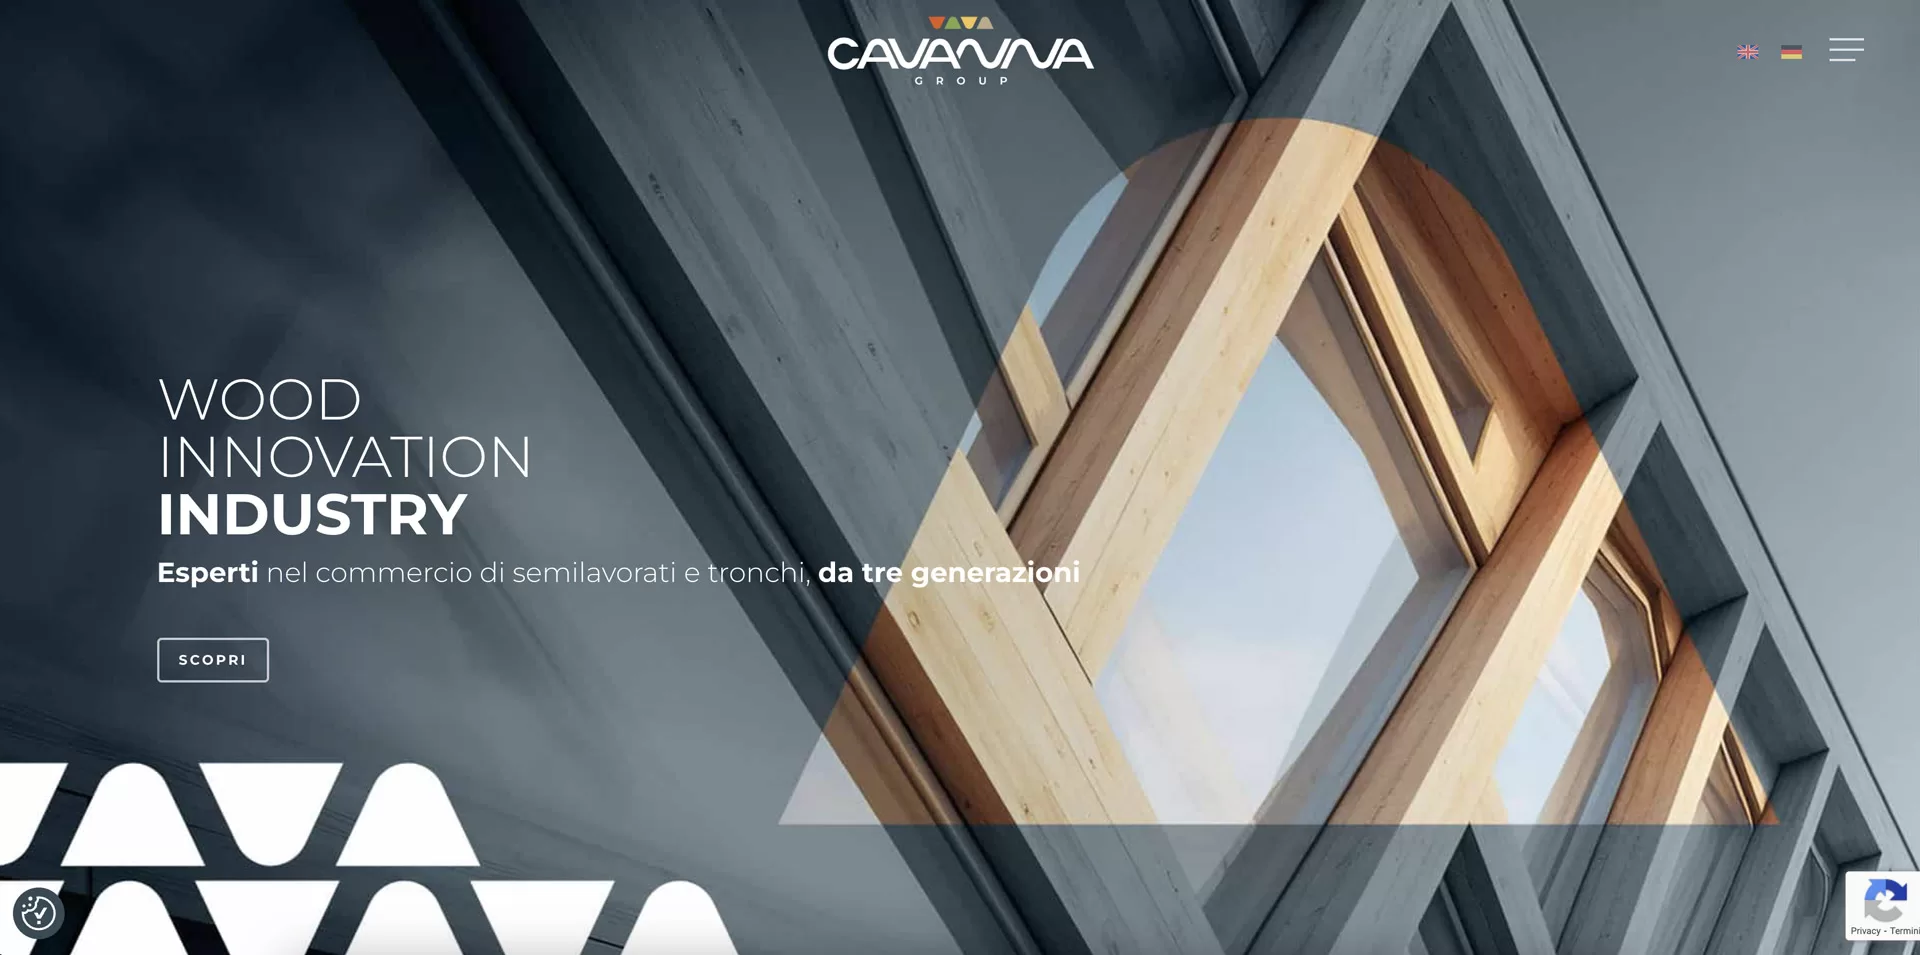 Cavanna Group Website